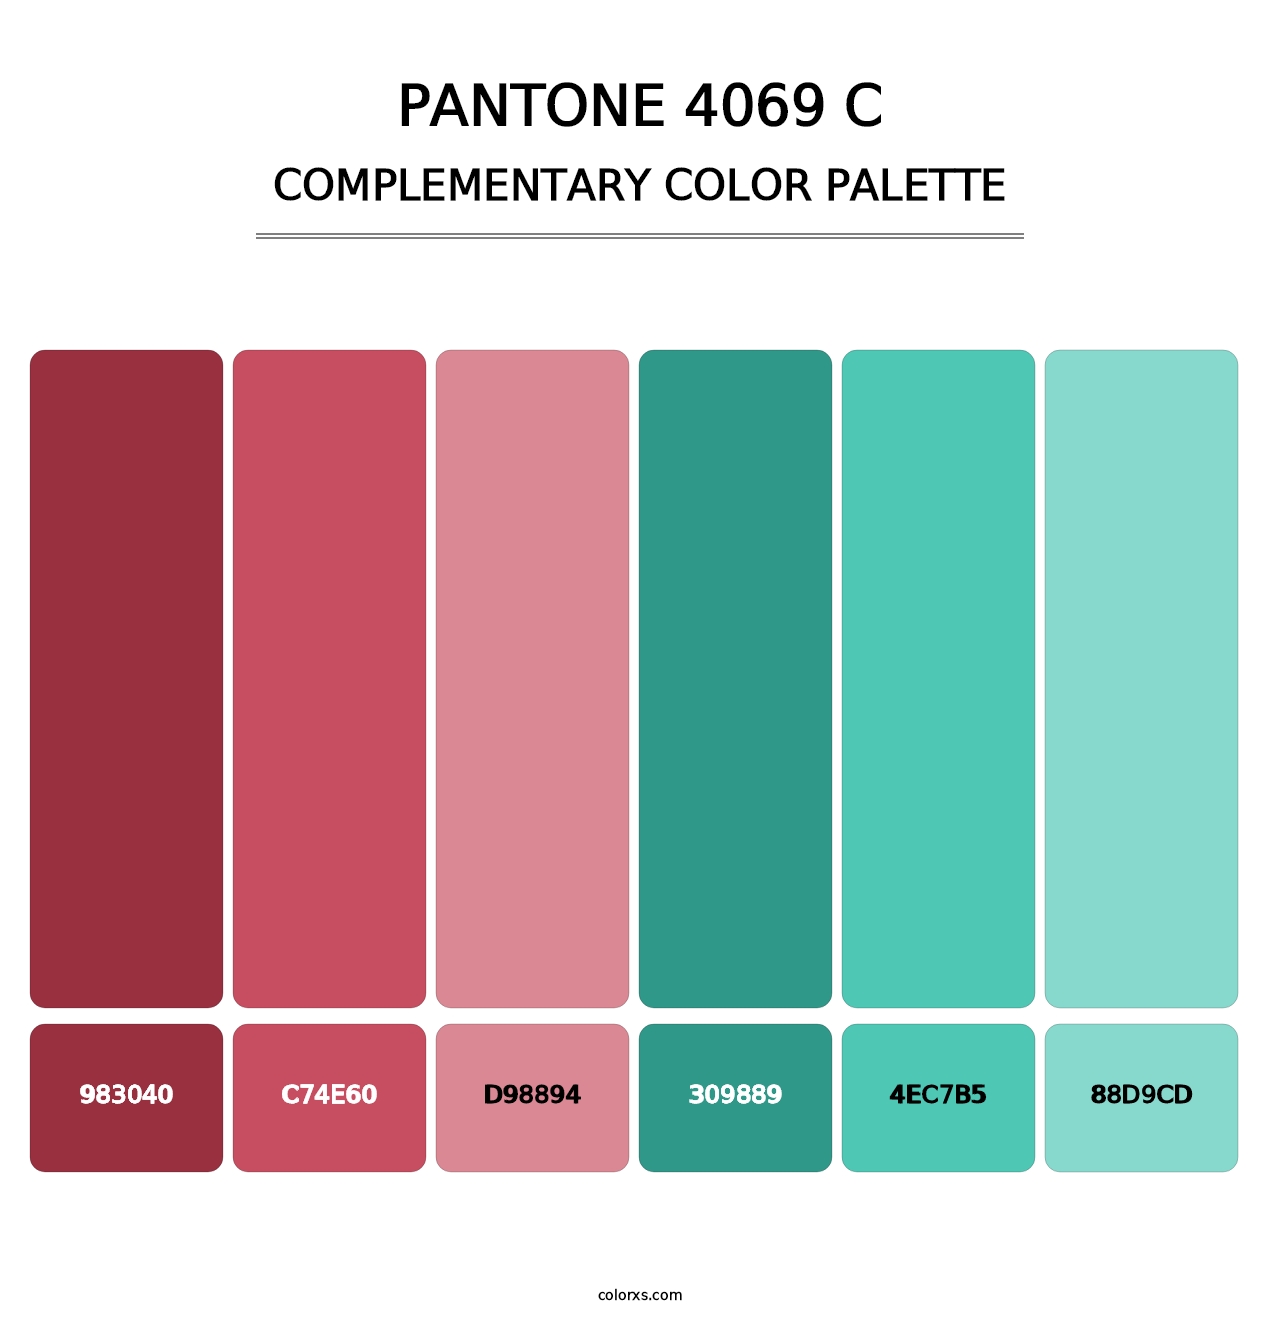 PANTONE 4069 C - Complementary Color Palette